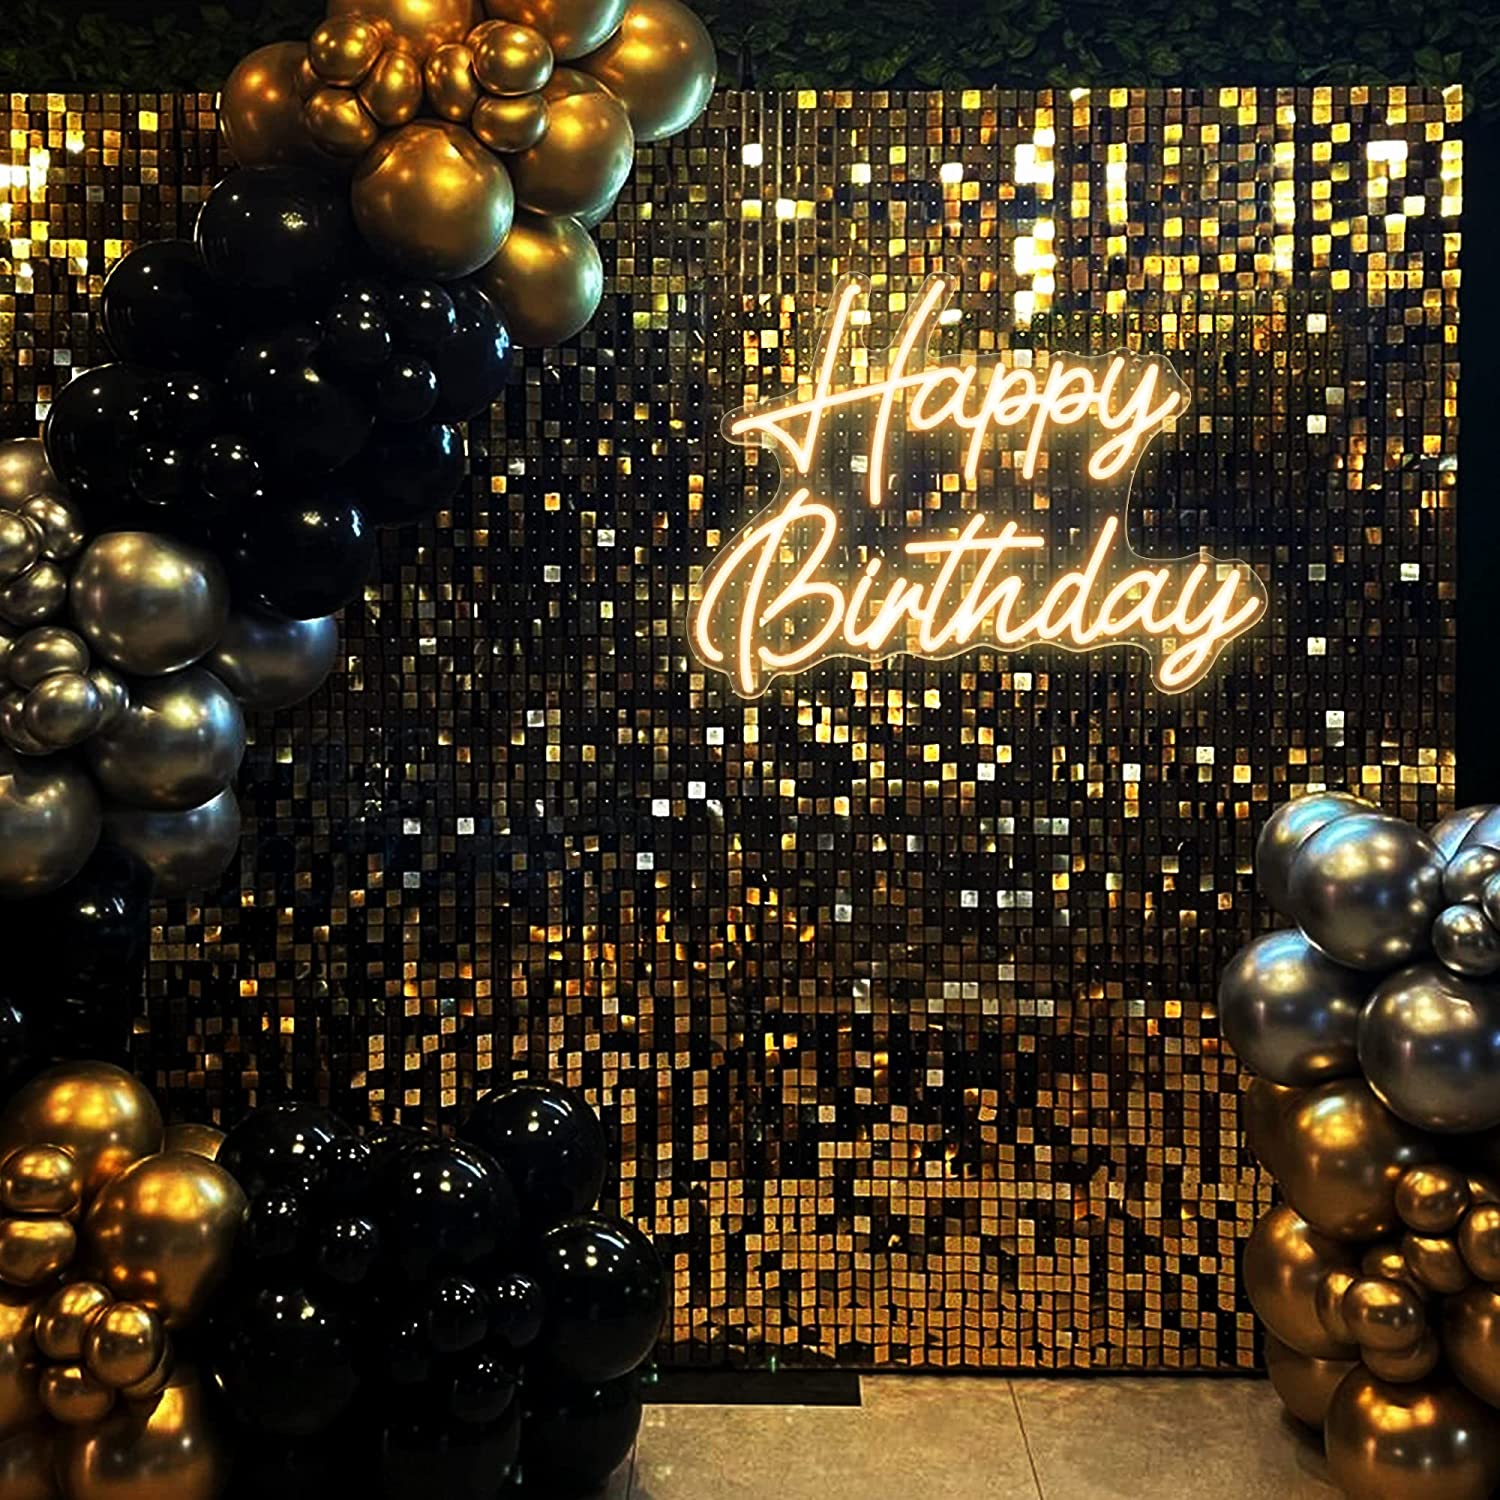 Happy Birthday丨LED Neon Light丨RL012丨AMAZING NEON - Shop